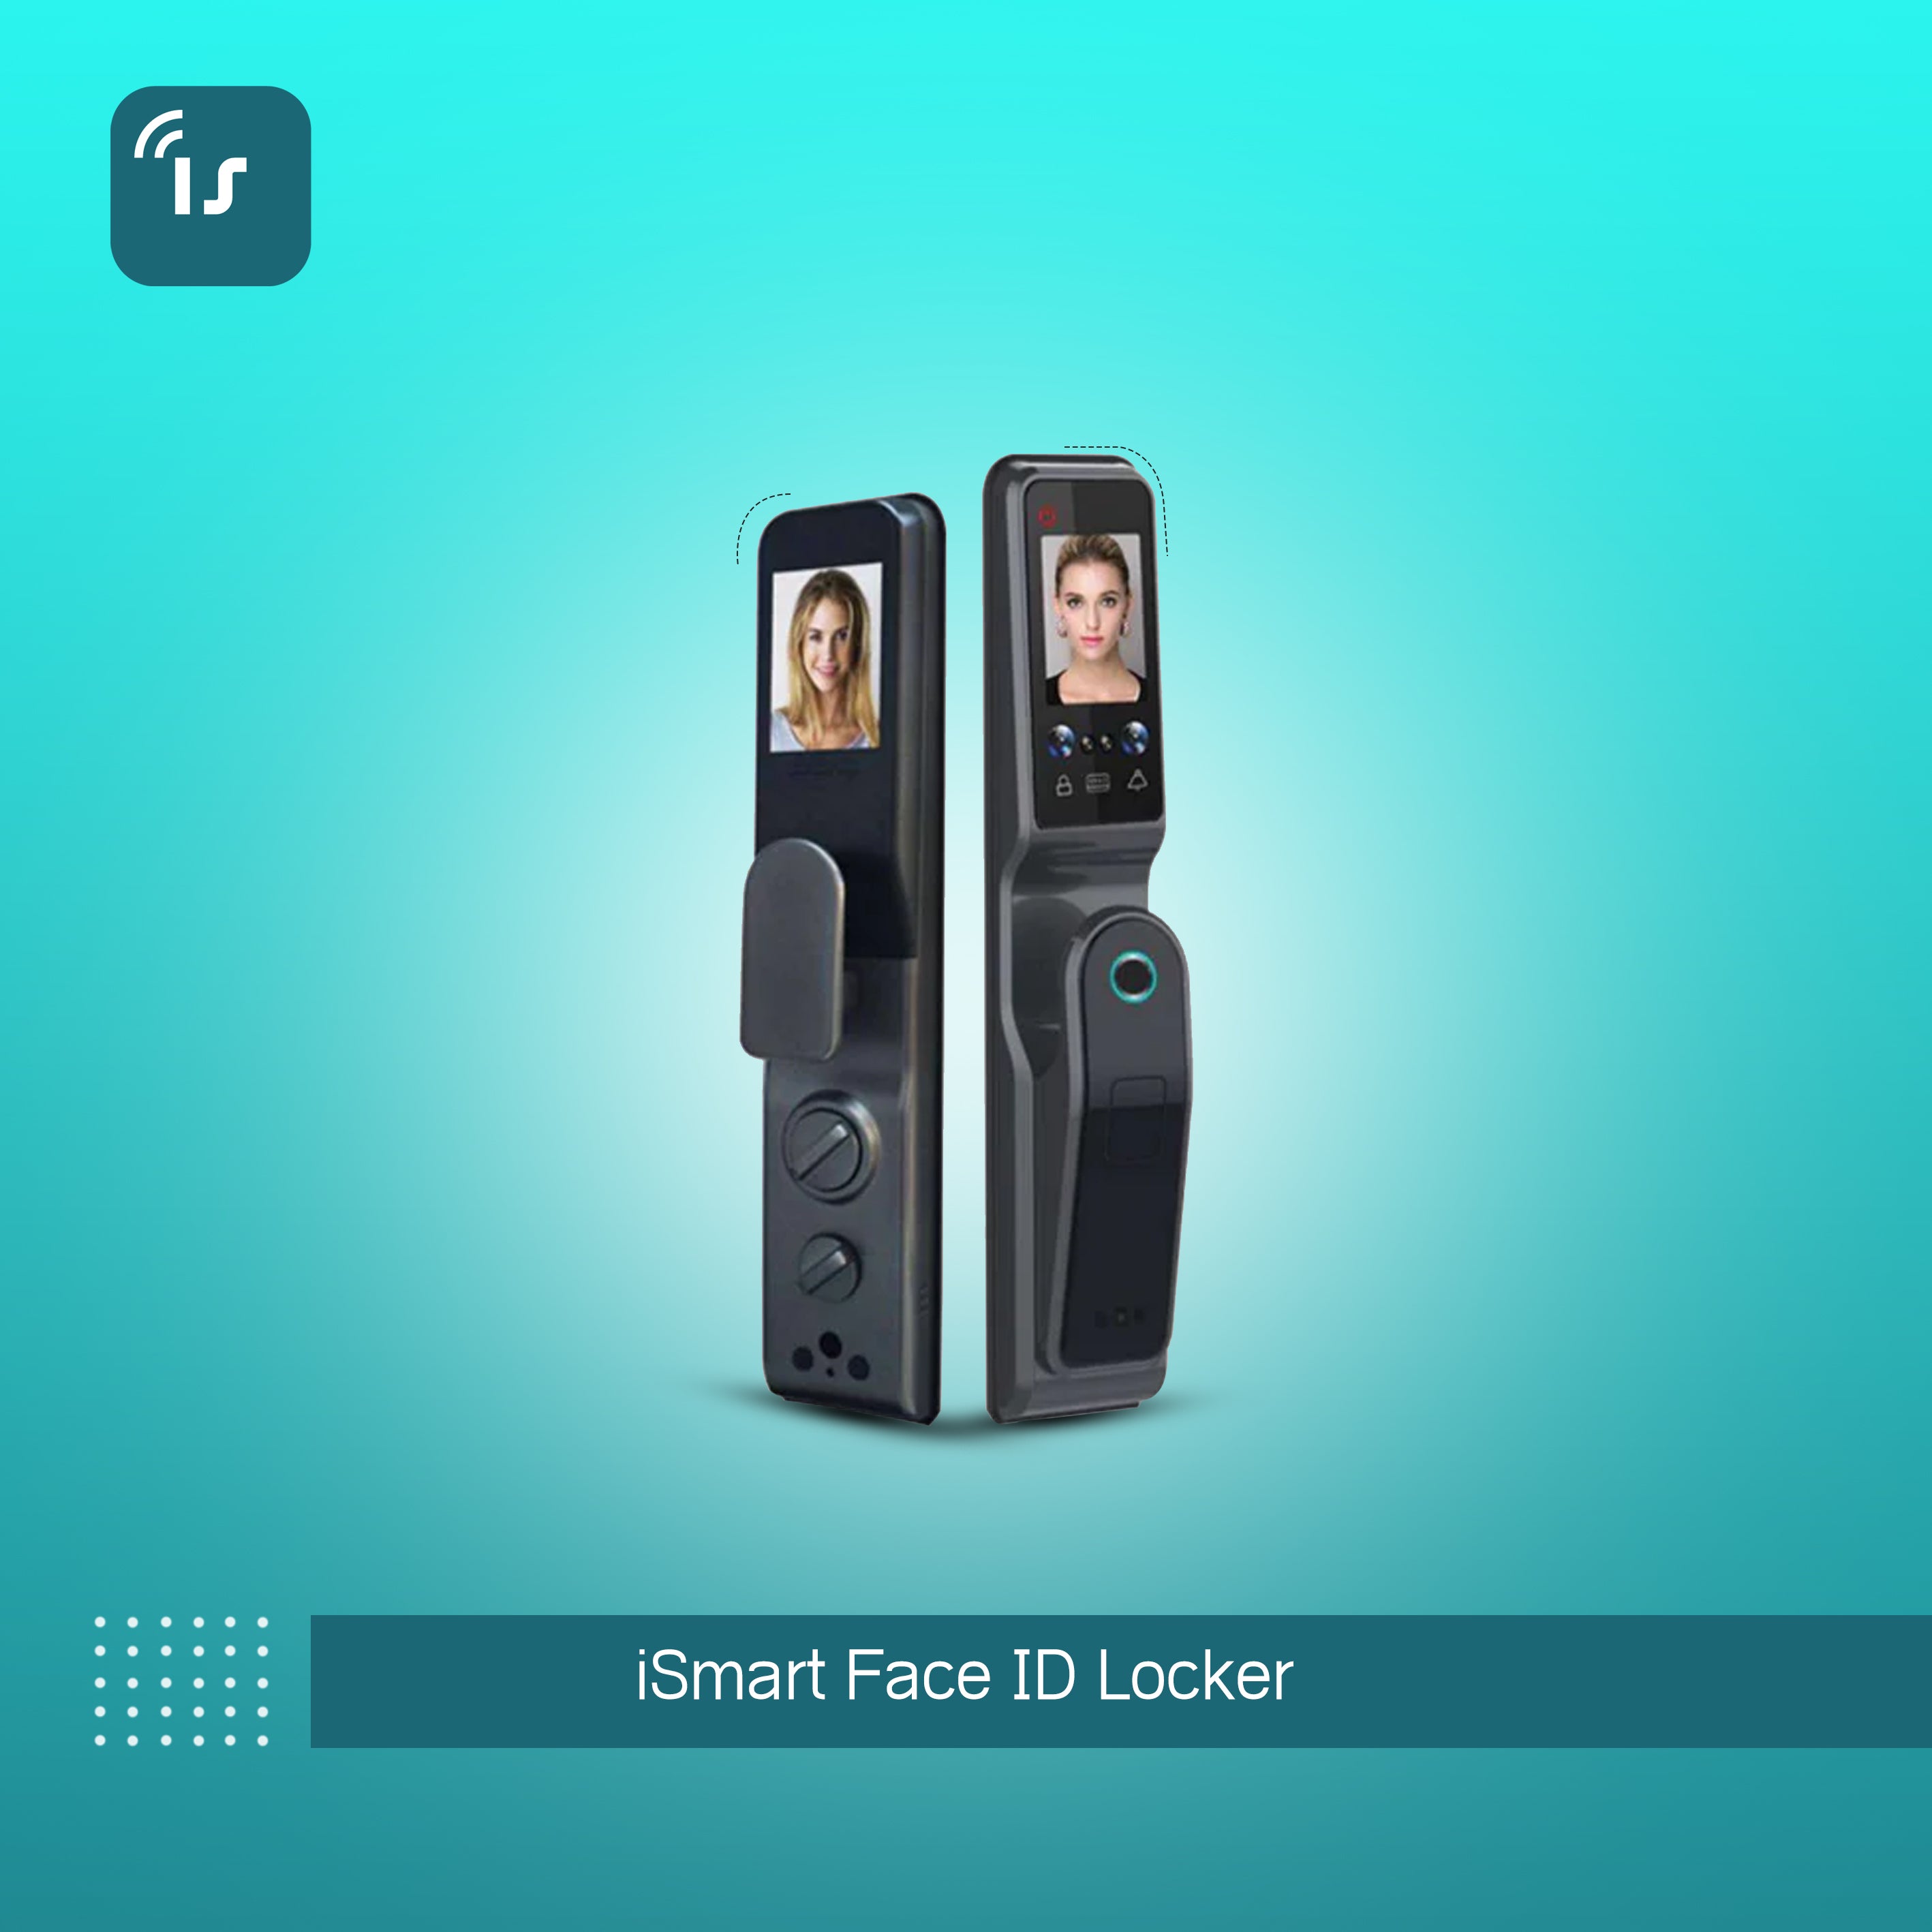 iSmart Face ID Locker